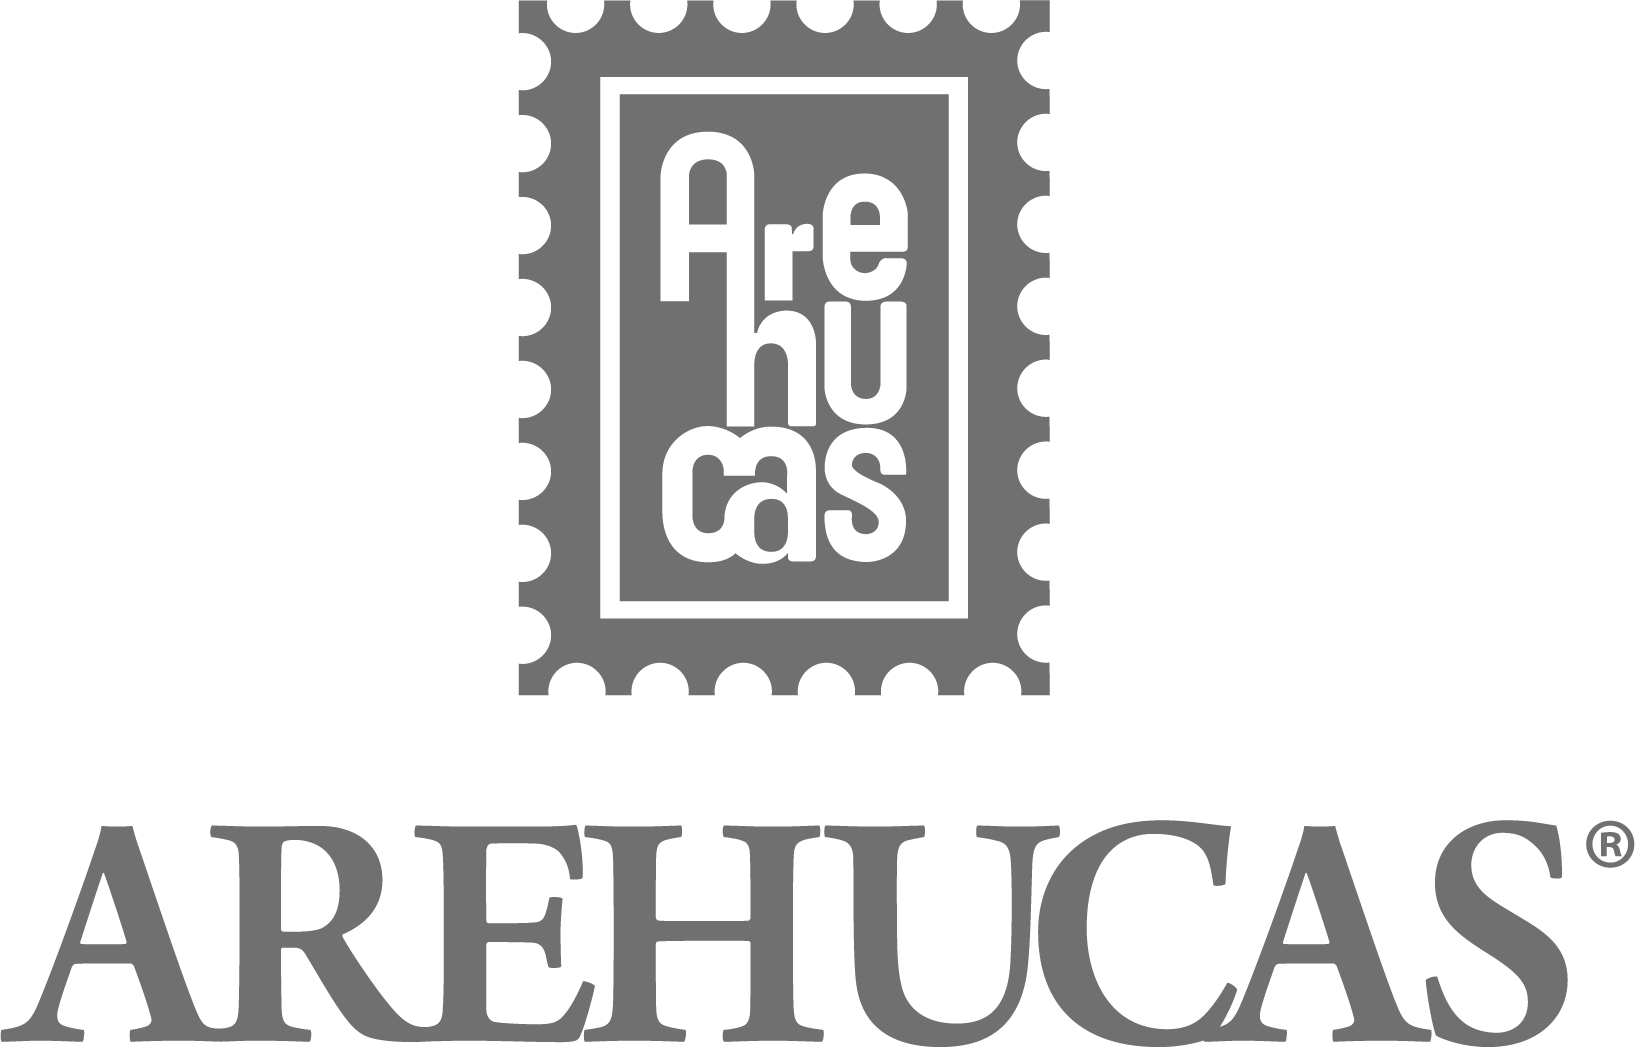 Arehucas